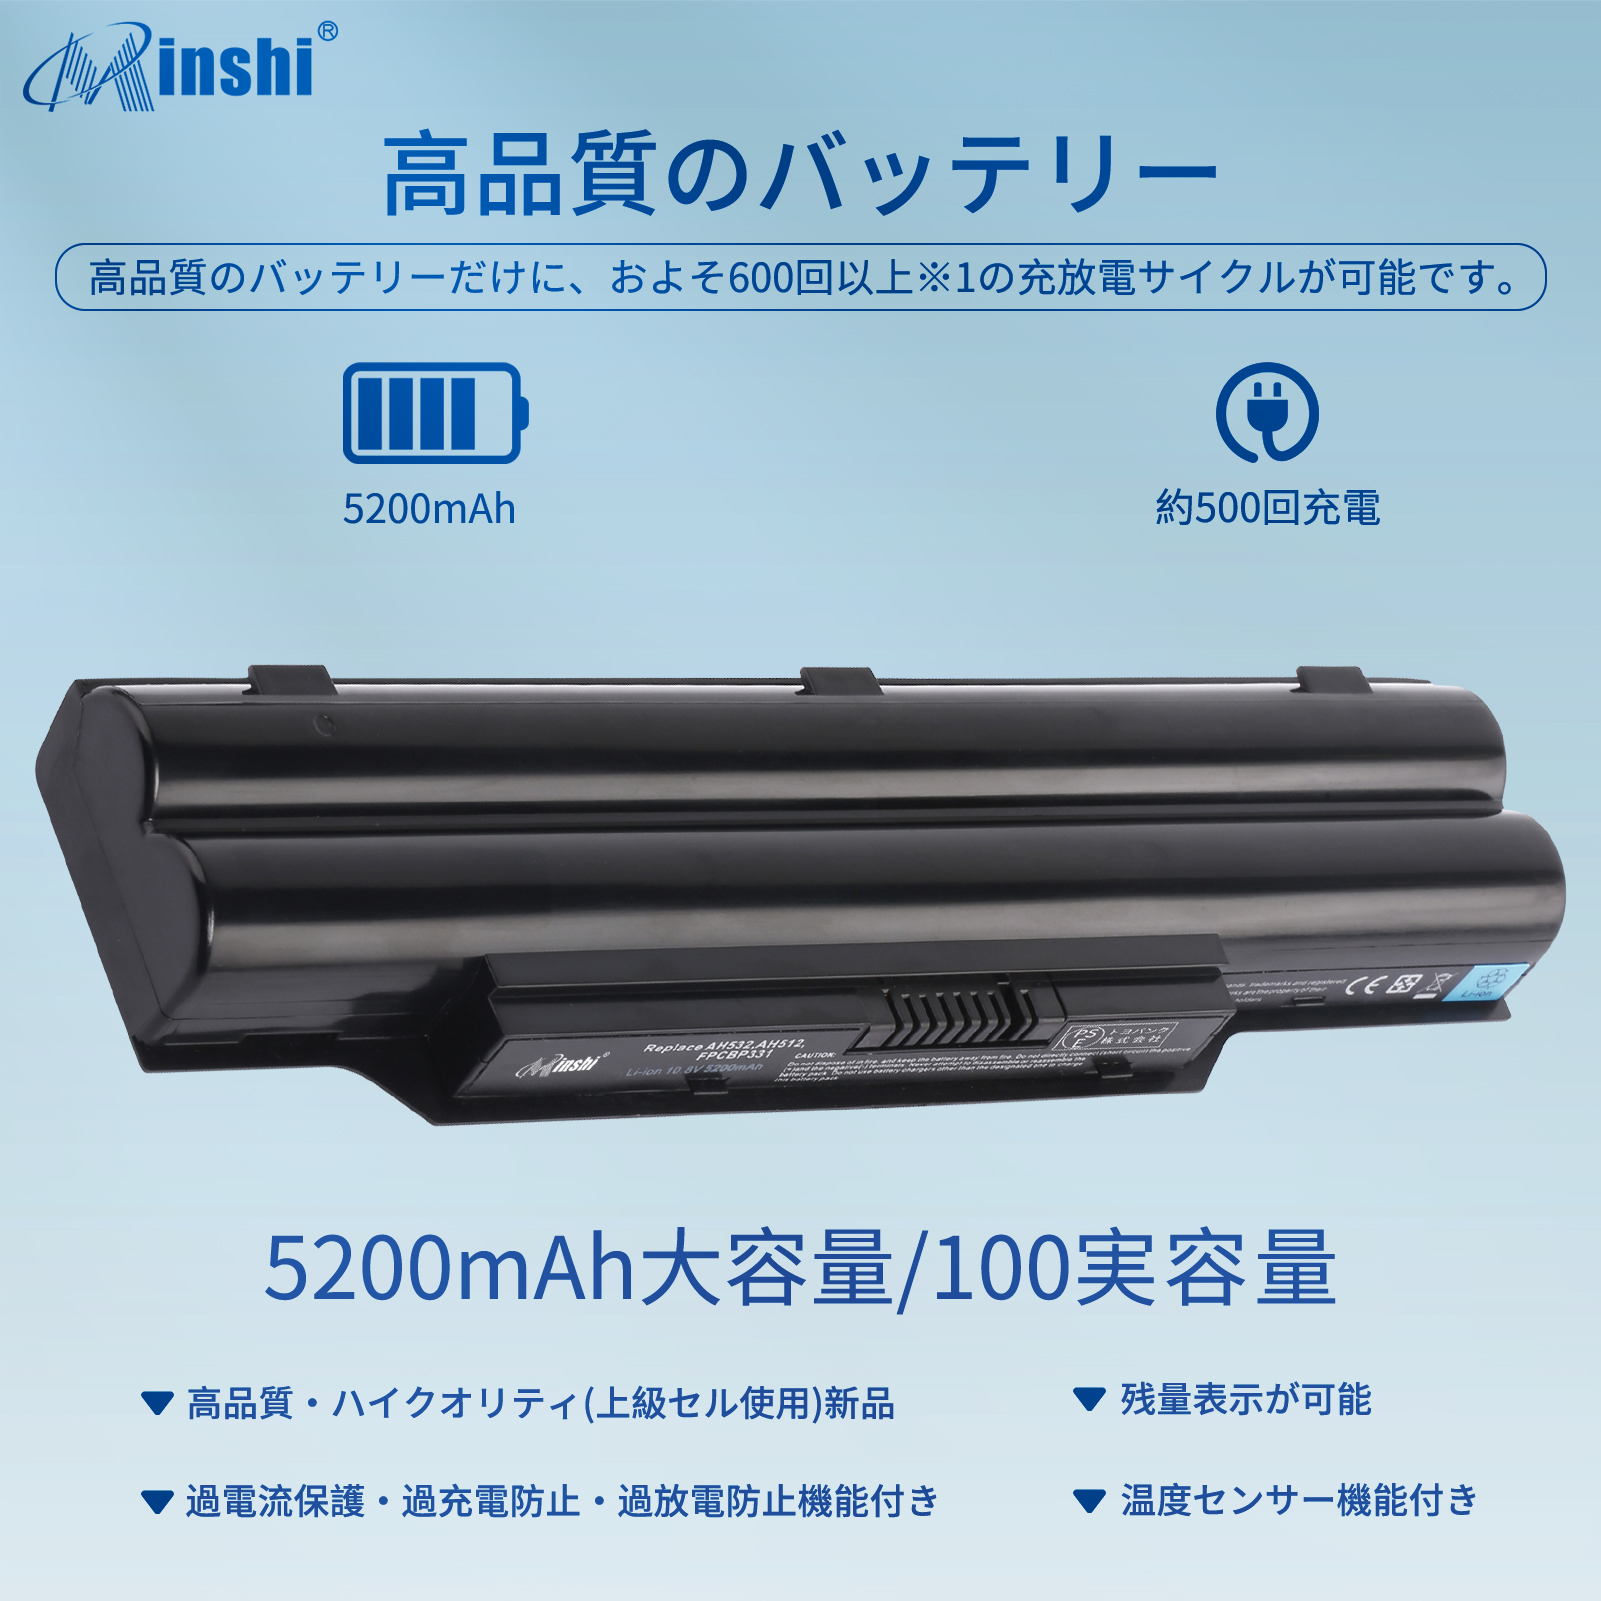  Fujitsu 富士通 LifeBook AH32 AH47 AH532 AH56 交換バッテリー FMVNBP212 FMVNBP213 対応用  minshi高性能 互換バッテ